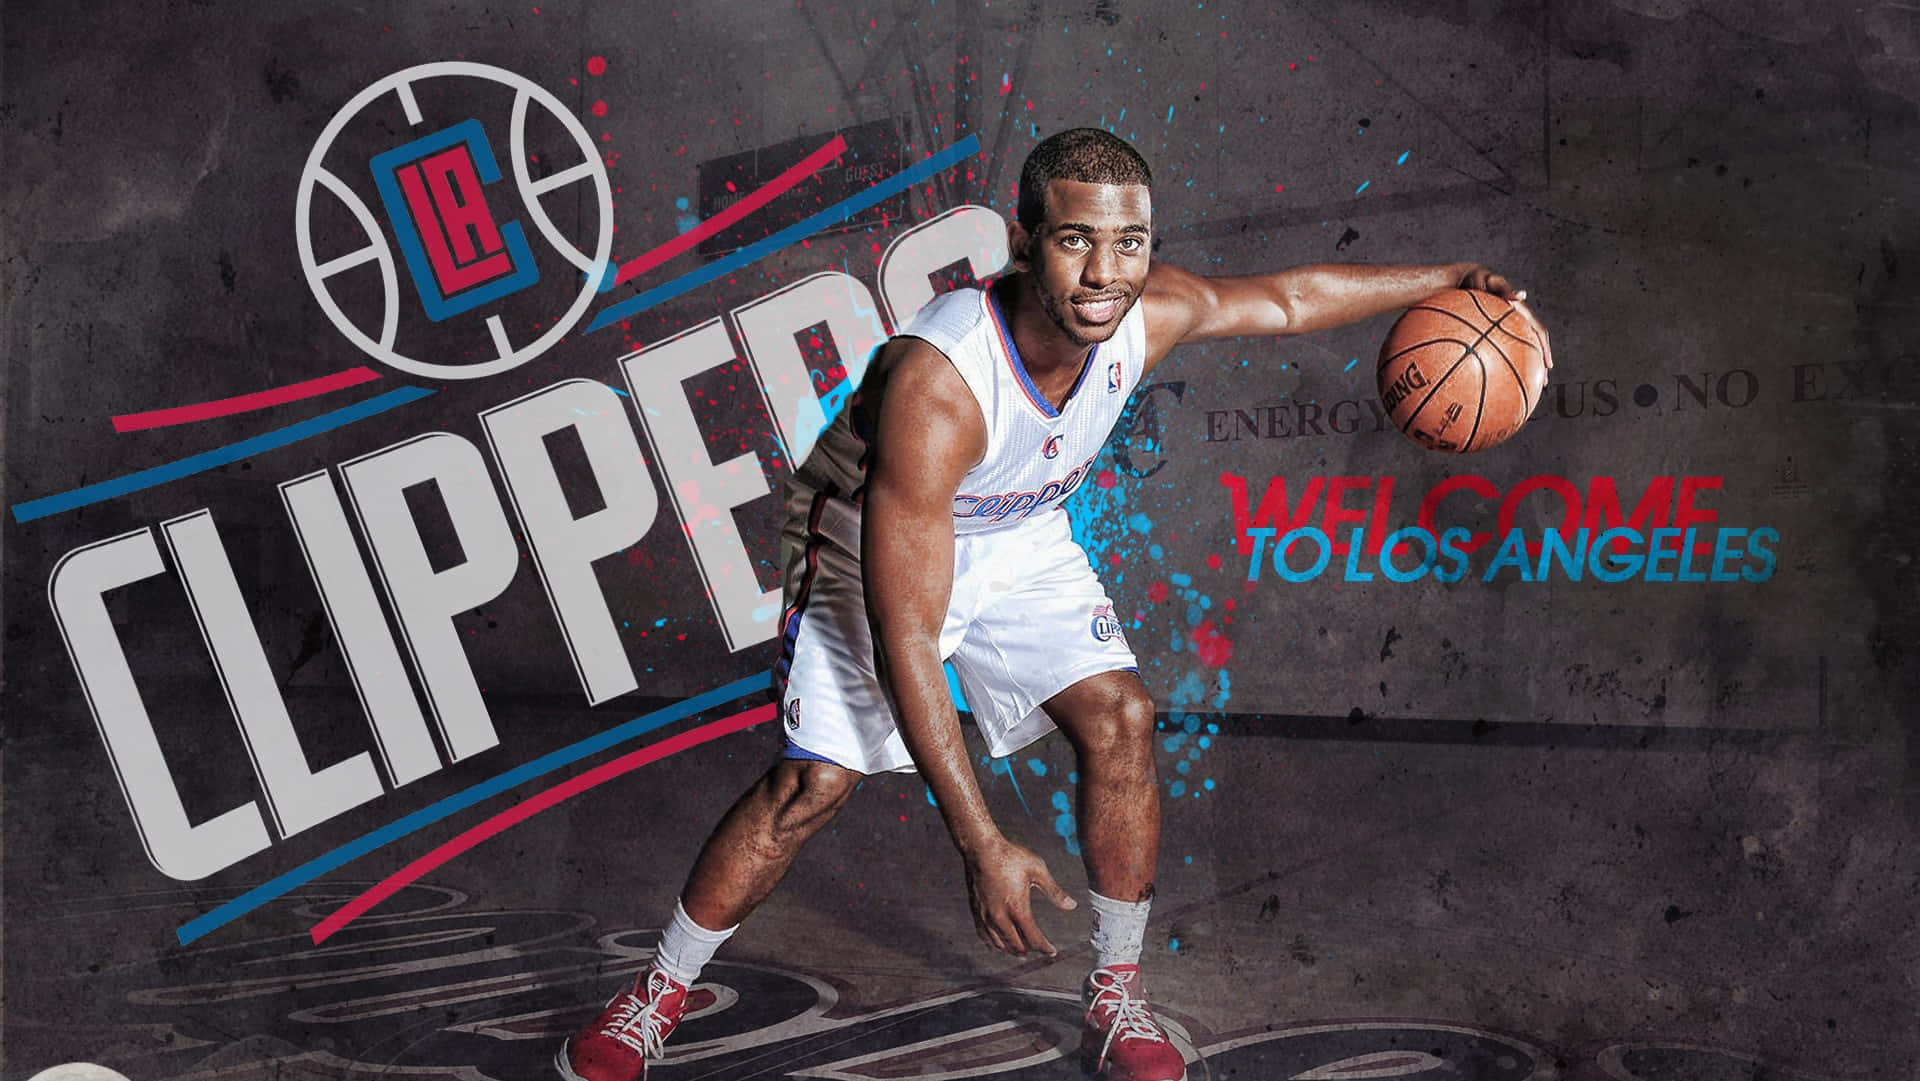 LA Clippers Professional Basketball Player Chris Paul Illustration Wallpaper